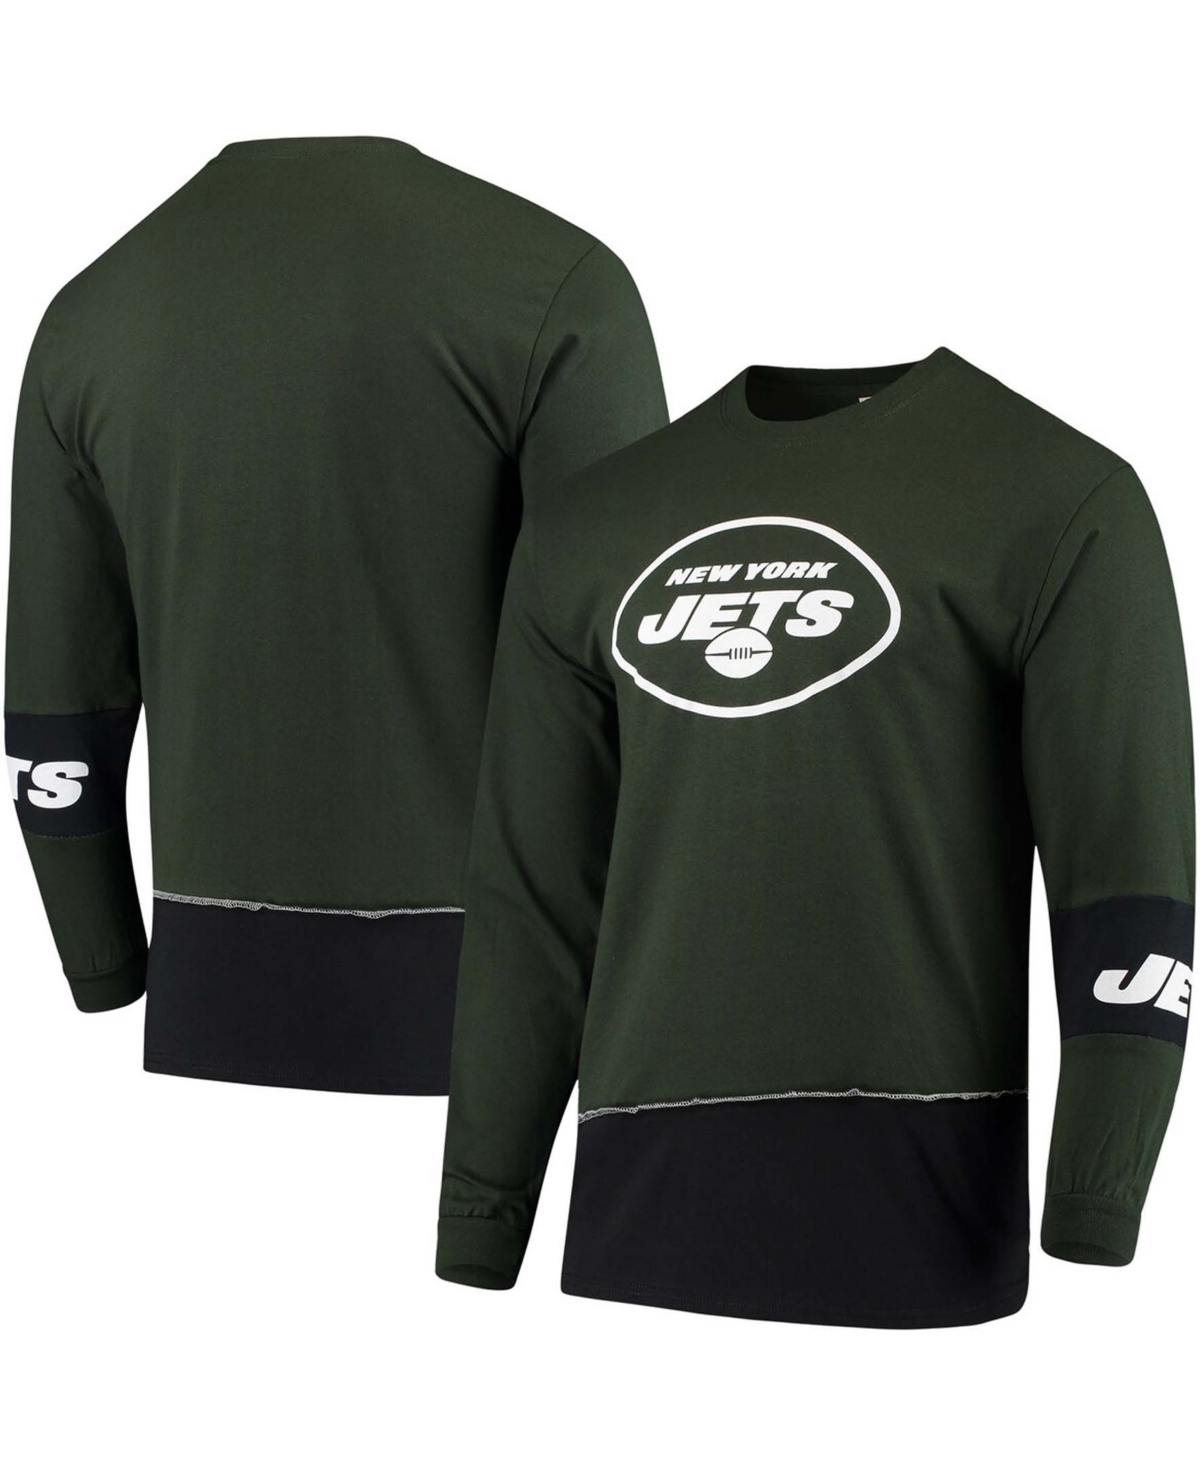 Refried Apparel Men's Green, Black New York Jets Angle Long Sleeve T-shirt In Green,black